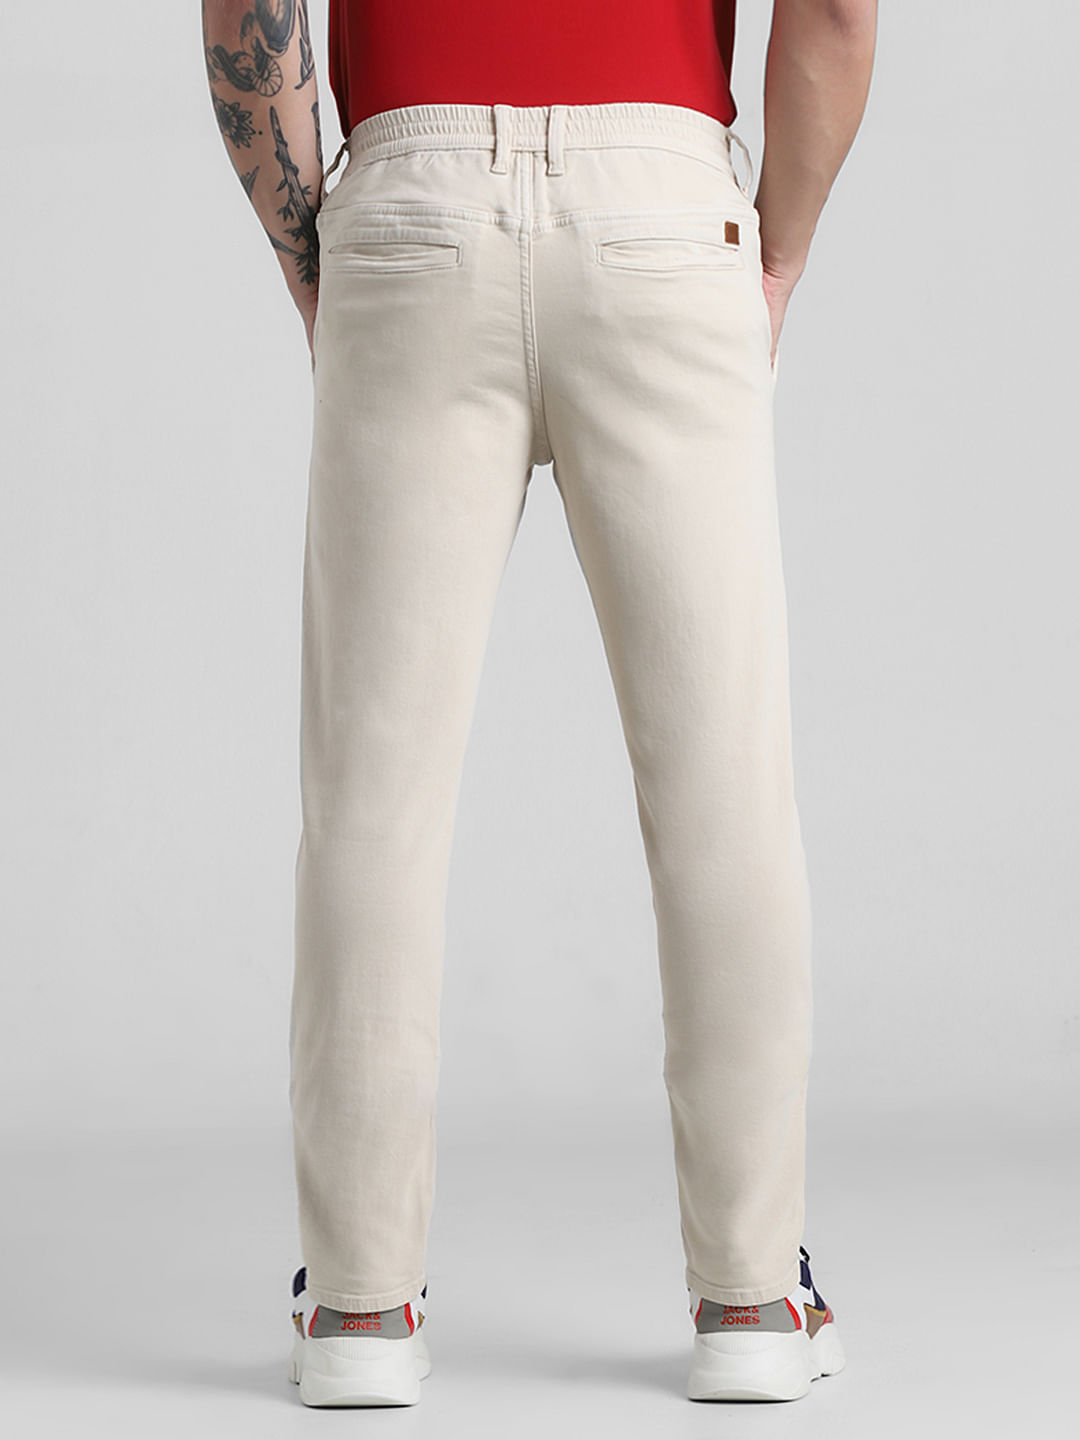 Linen Khakis in Slim Fit | Gap